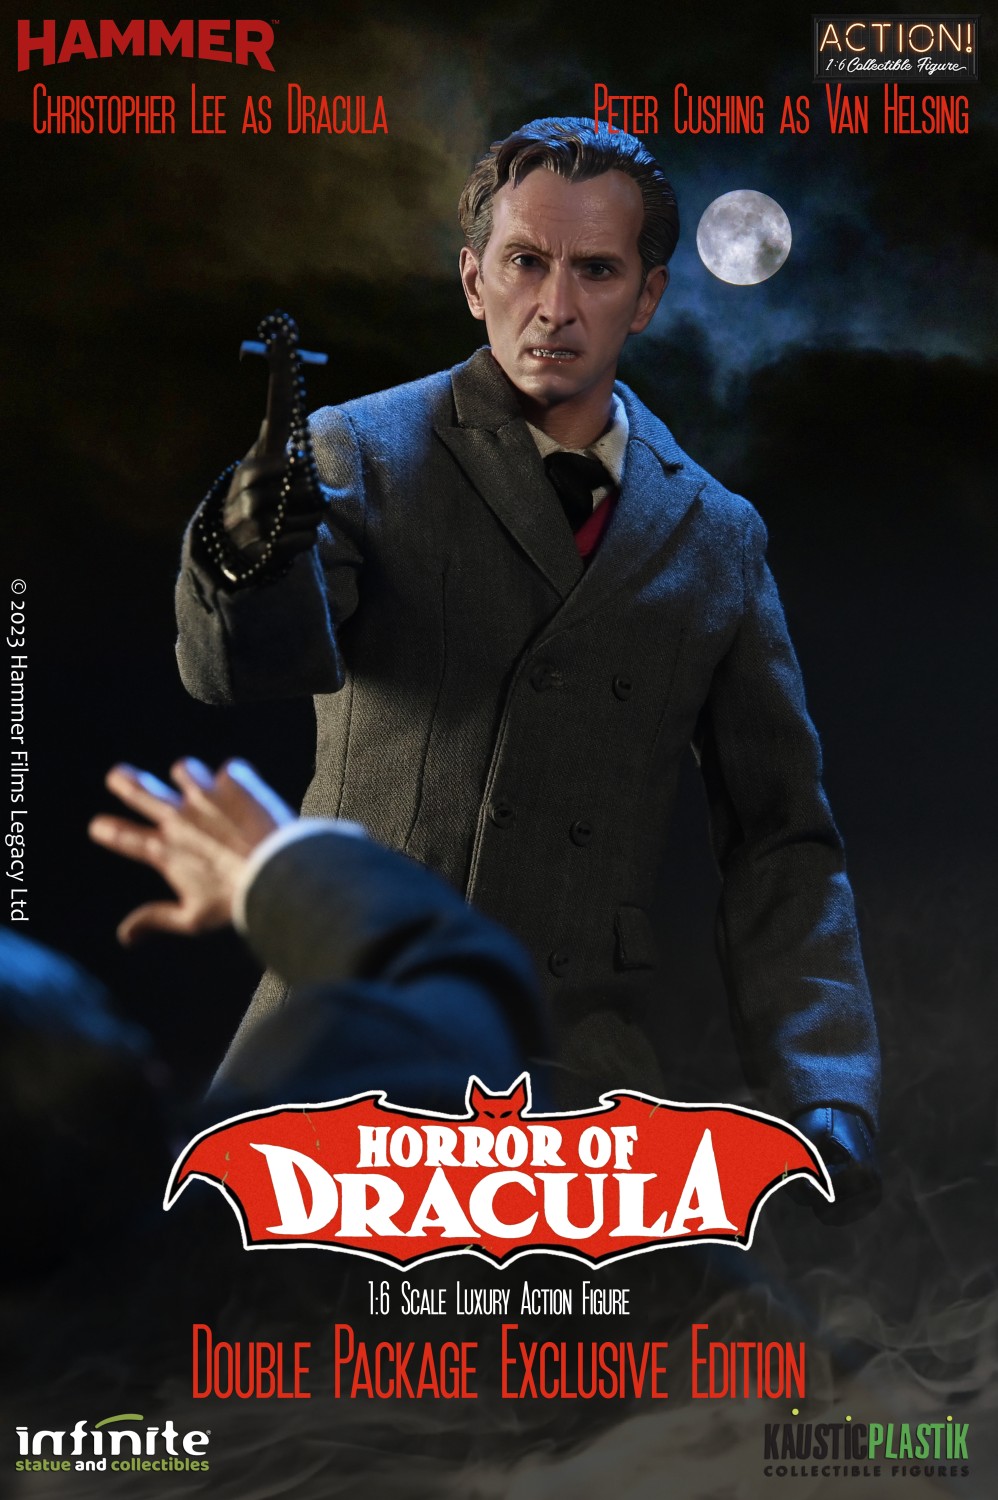 movie - NEW PRODUCT: Kaustic Plastik & Infinite Statue: 1/6 scale Horror Of Dracula: Dracula & Van Helsing action figures 922